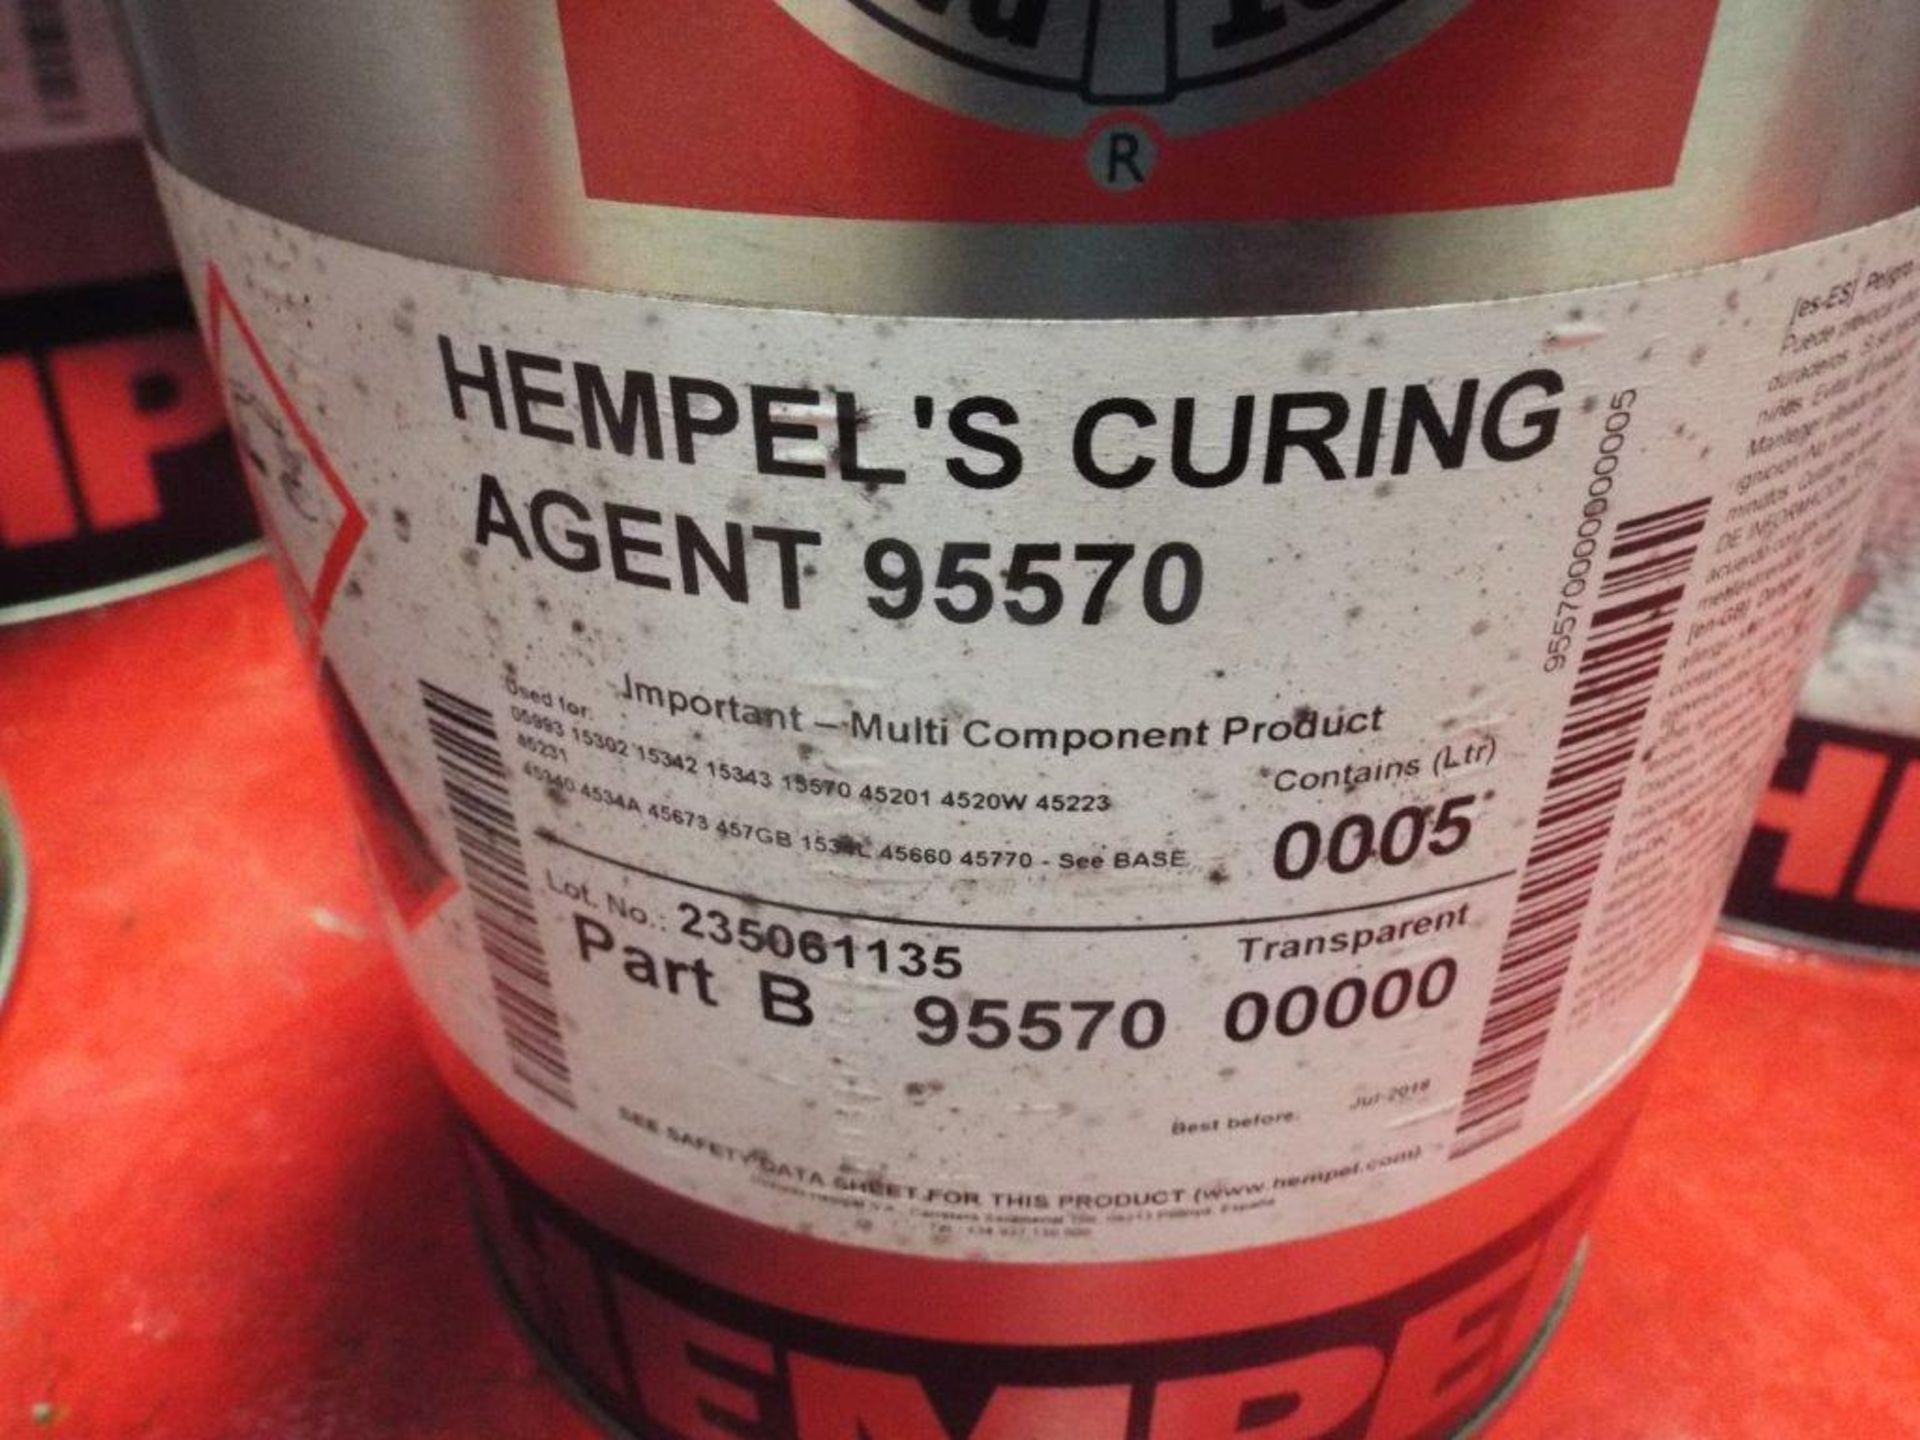 9 x 15/5L Cans of Hempel Hempadur 15570 2-Part Epoxy Paint - Red + 1 x 3.75/1.25L Reddish Grey - Image 3 of 7